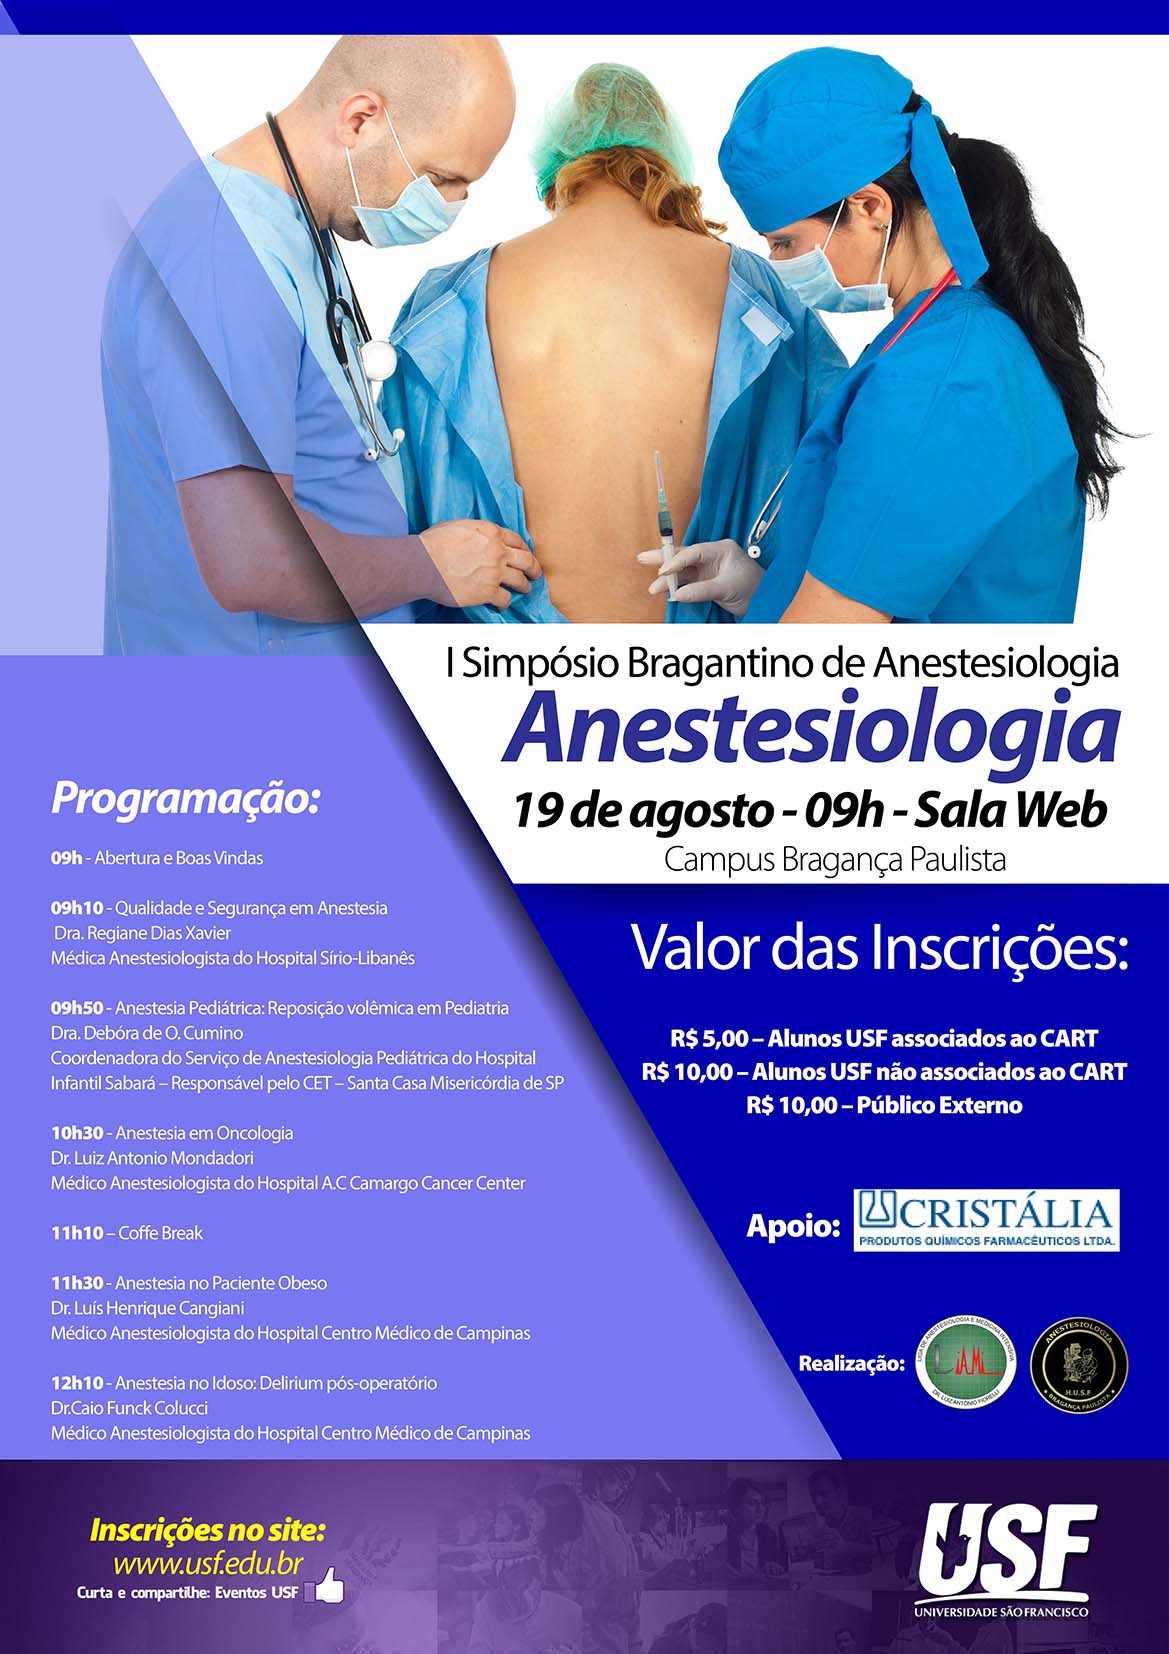 I Simpósio Bragantino de Anestesiologia